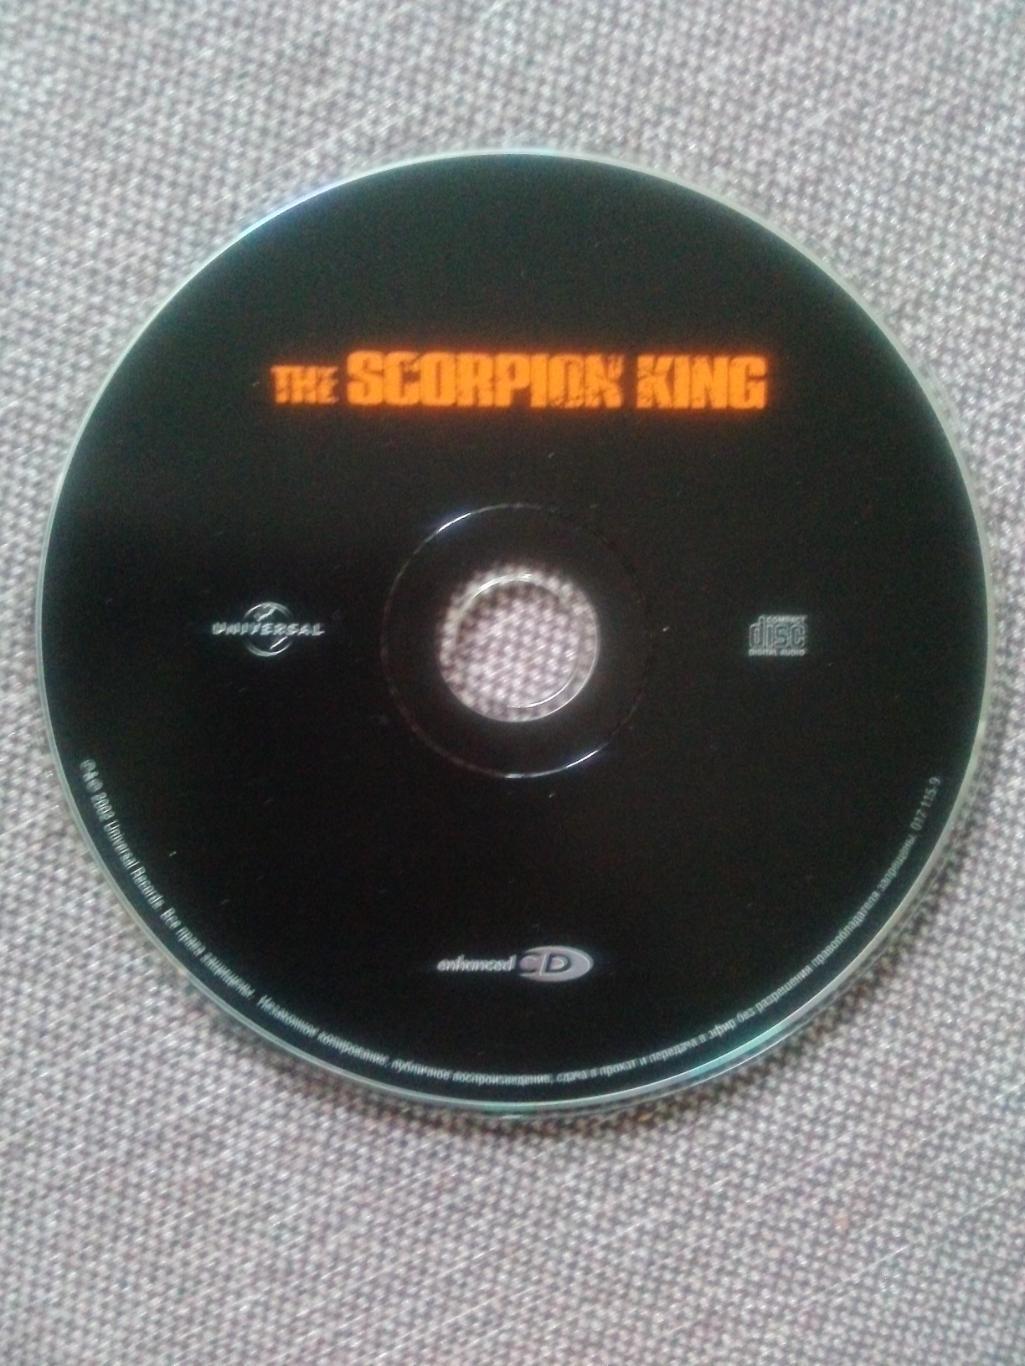 CD диск :The Scorpion King(музыка из этого фильма) Саундтрек (Рок - музыка 4